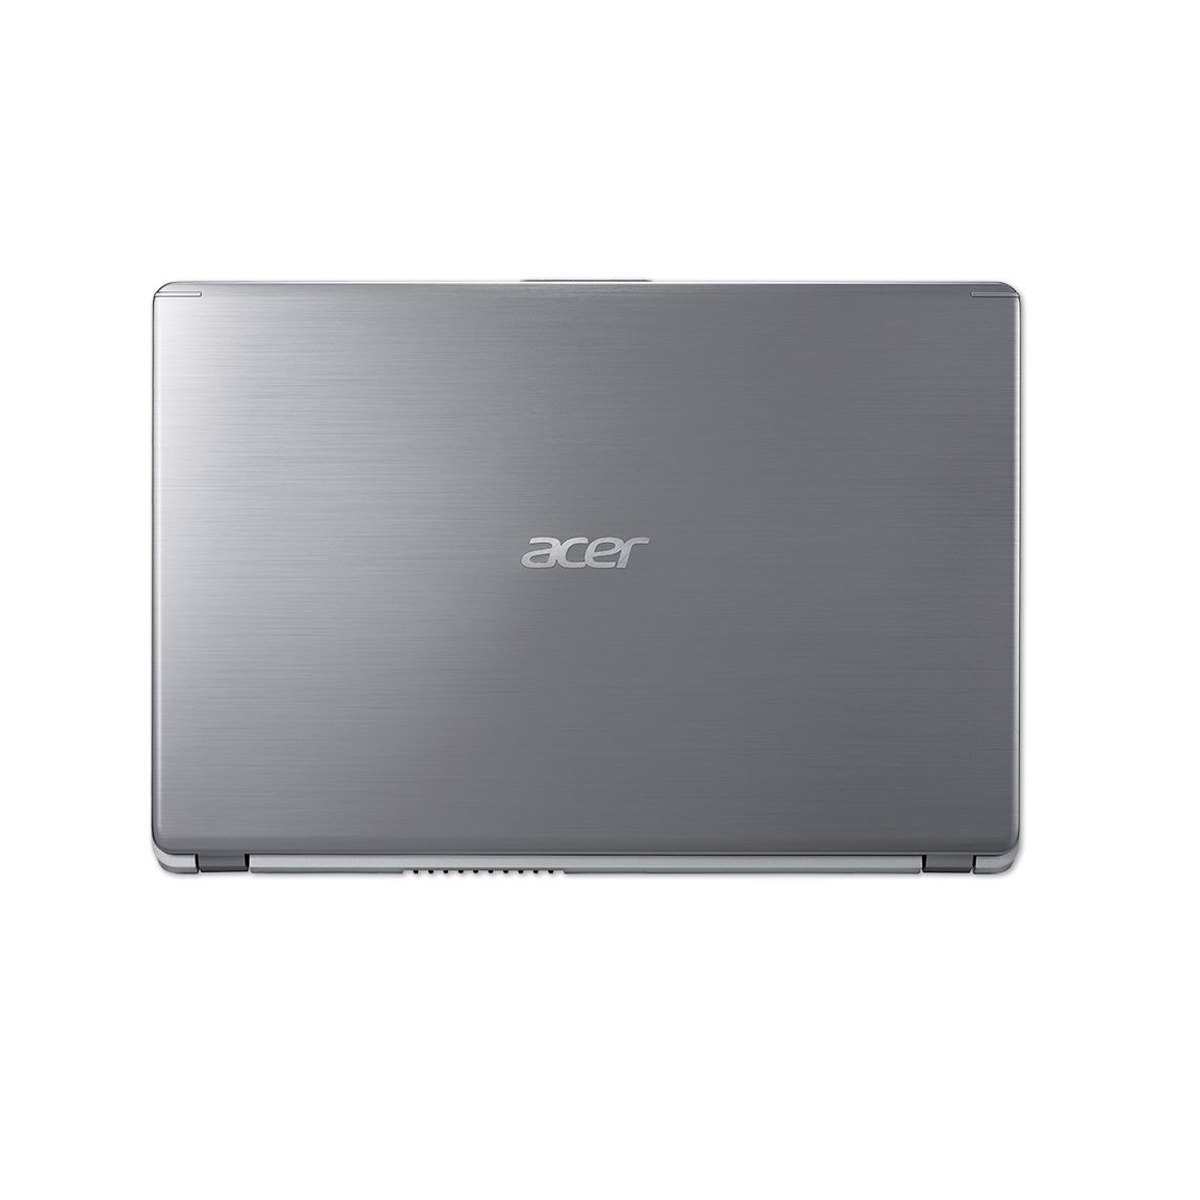 Notebook Acer A515 Core I5 8265u 8gb Ddr4 Hd 1tb Ssd 240gb Tela 15.6' Led Hd Windows 10 Home